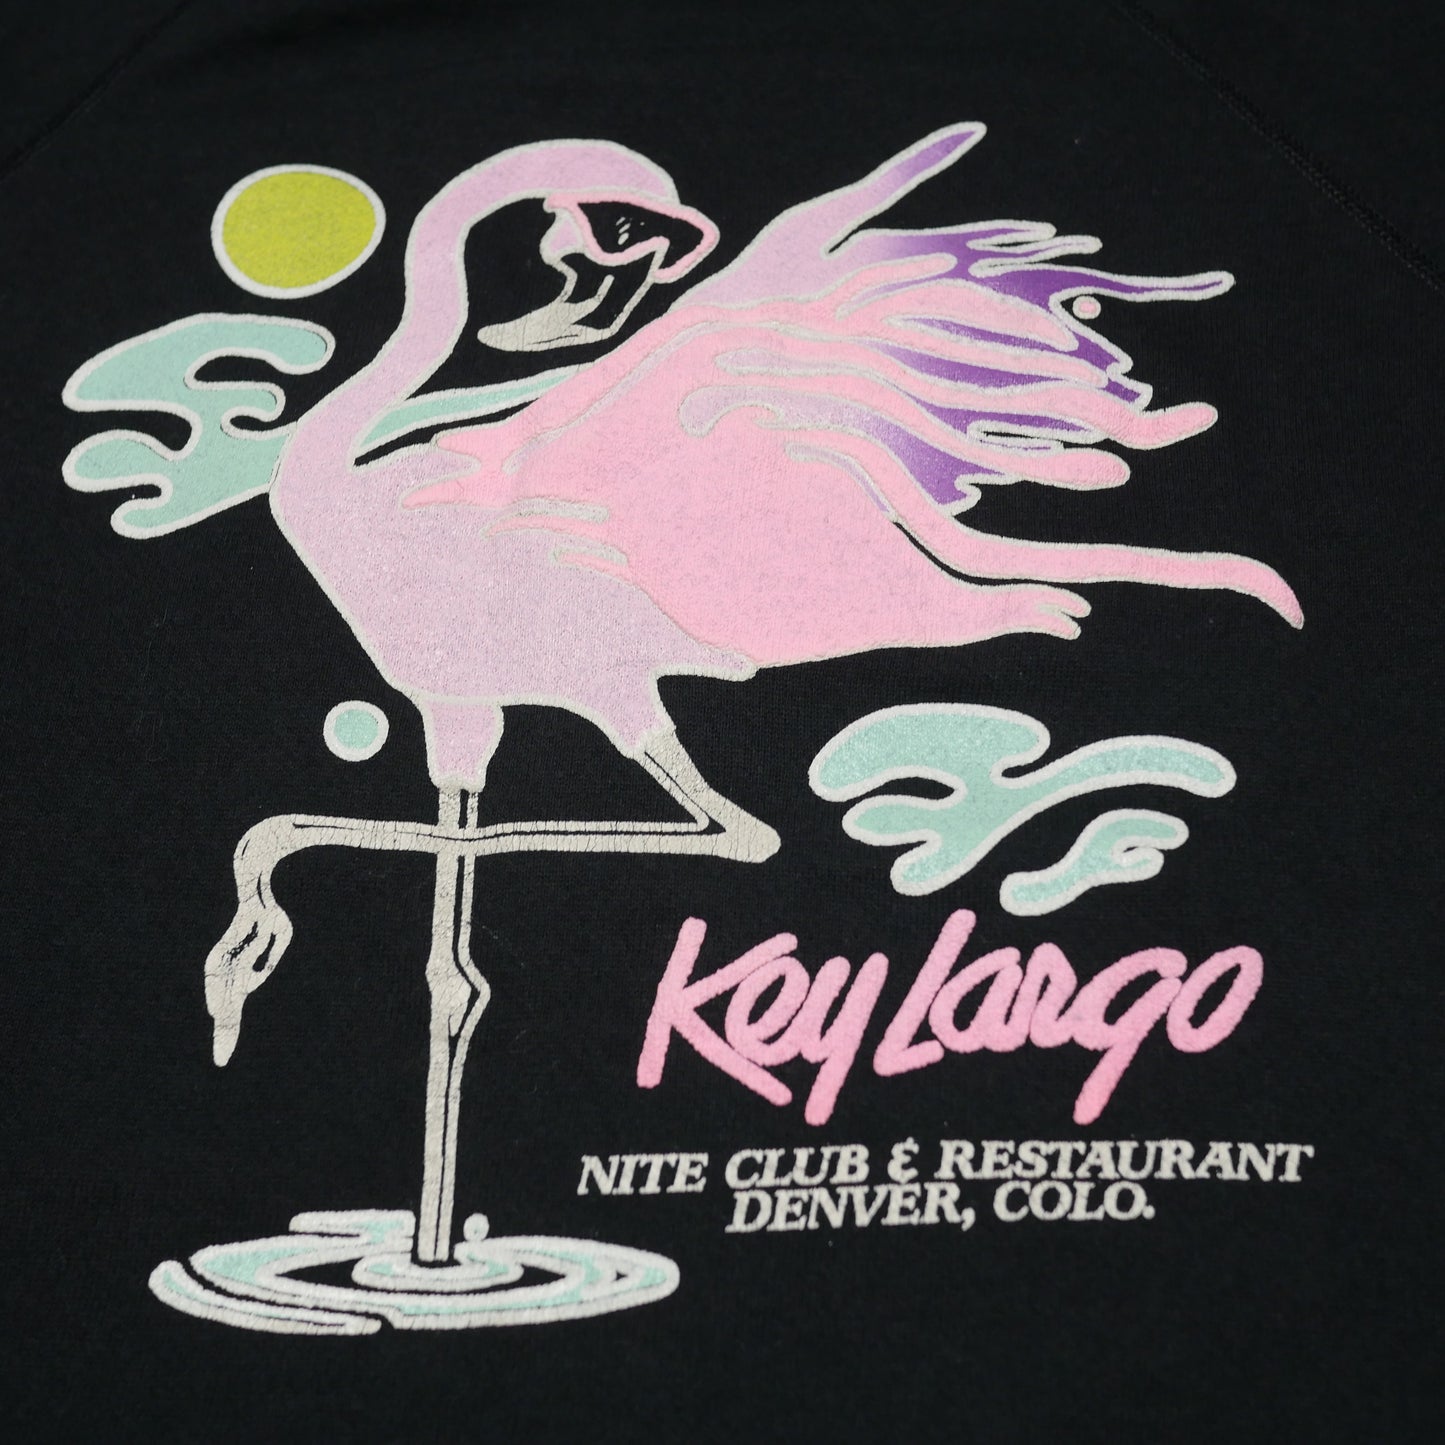 Key Largo Restaurant Denver Colorado Crewneck Sweatshirt - Large